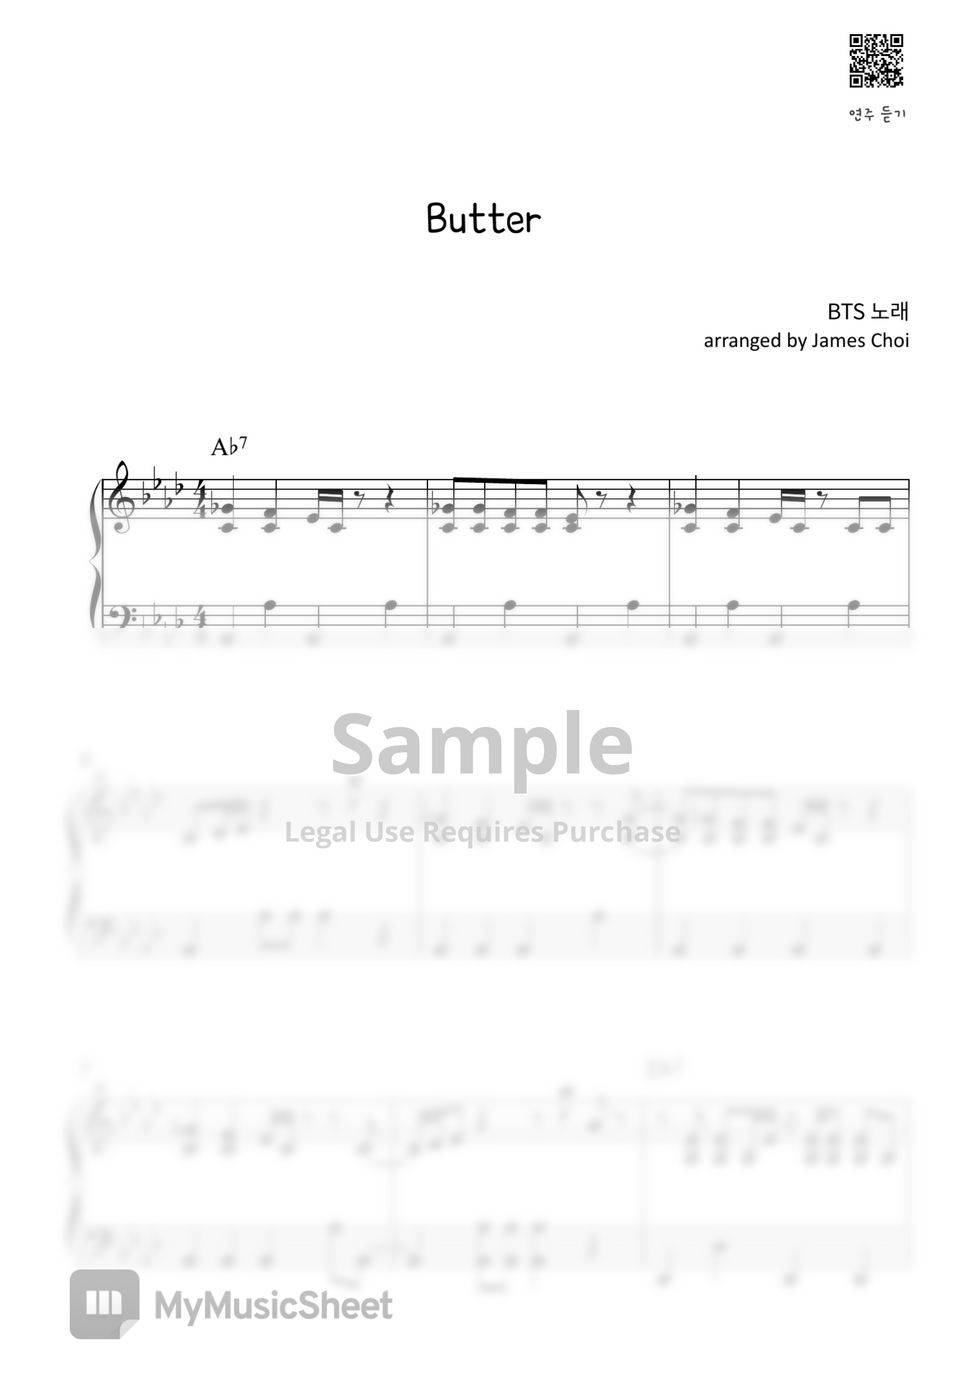 BTS - Butter (not difficult) by JC